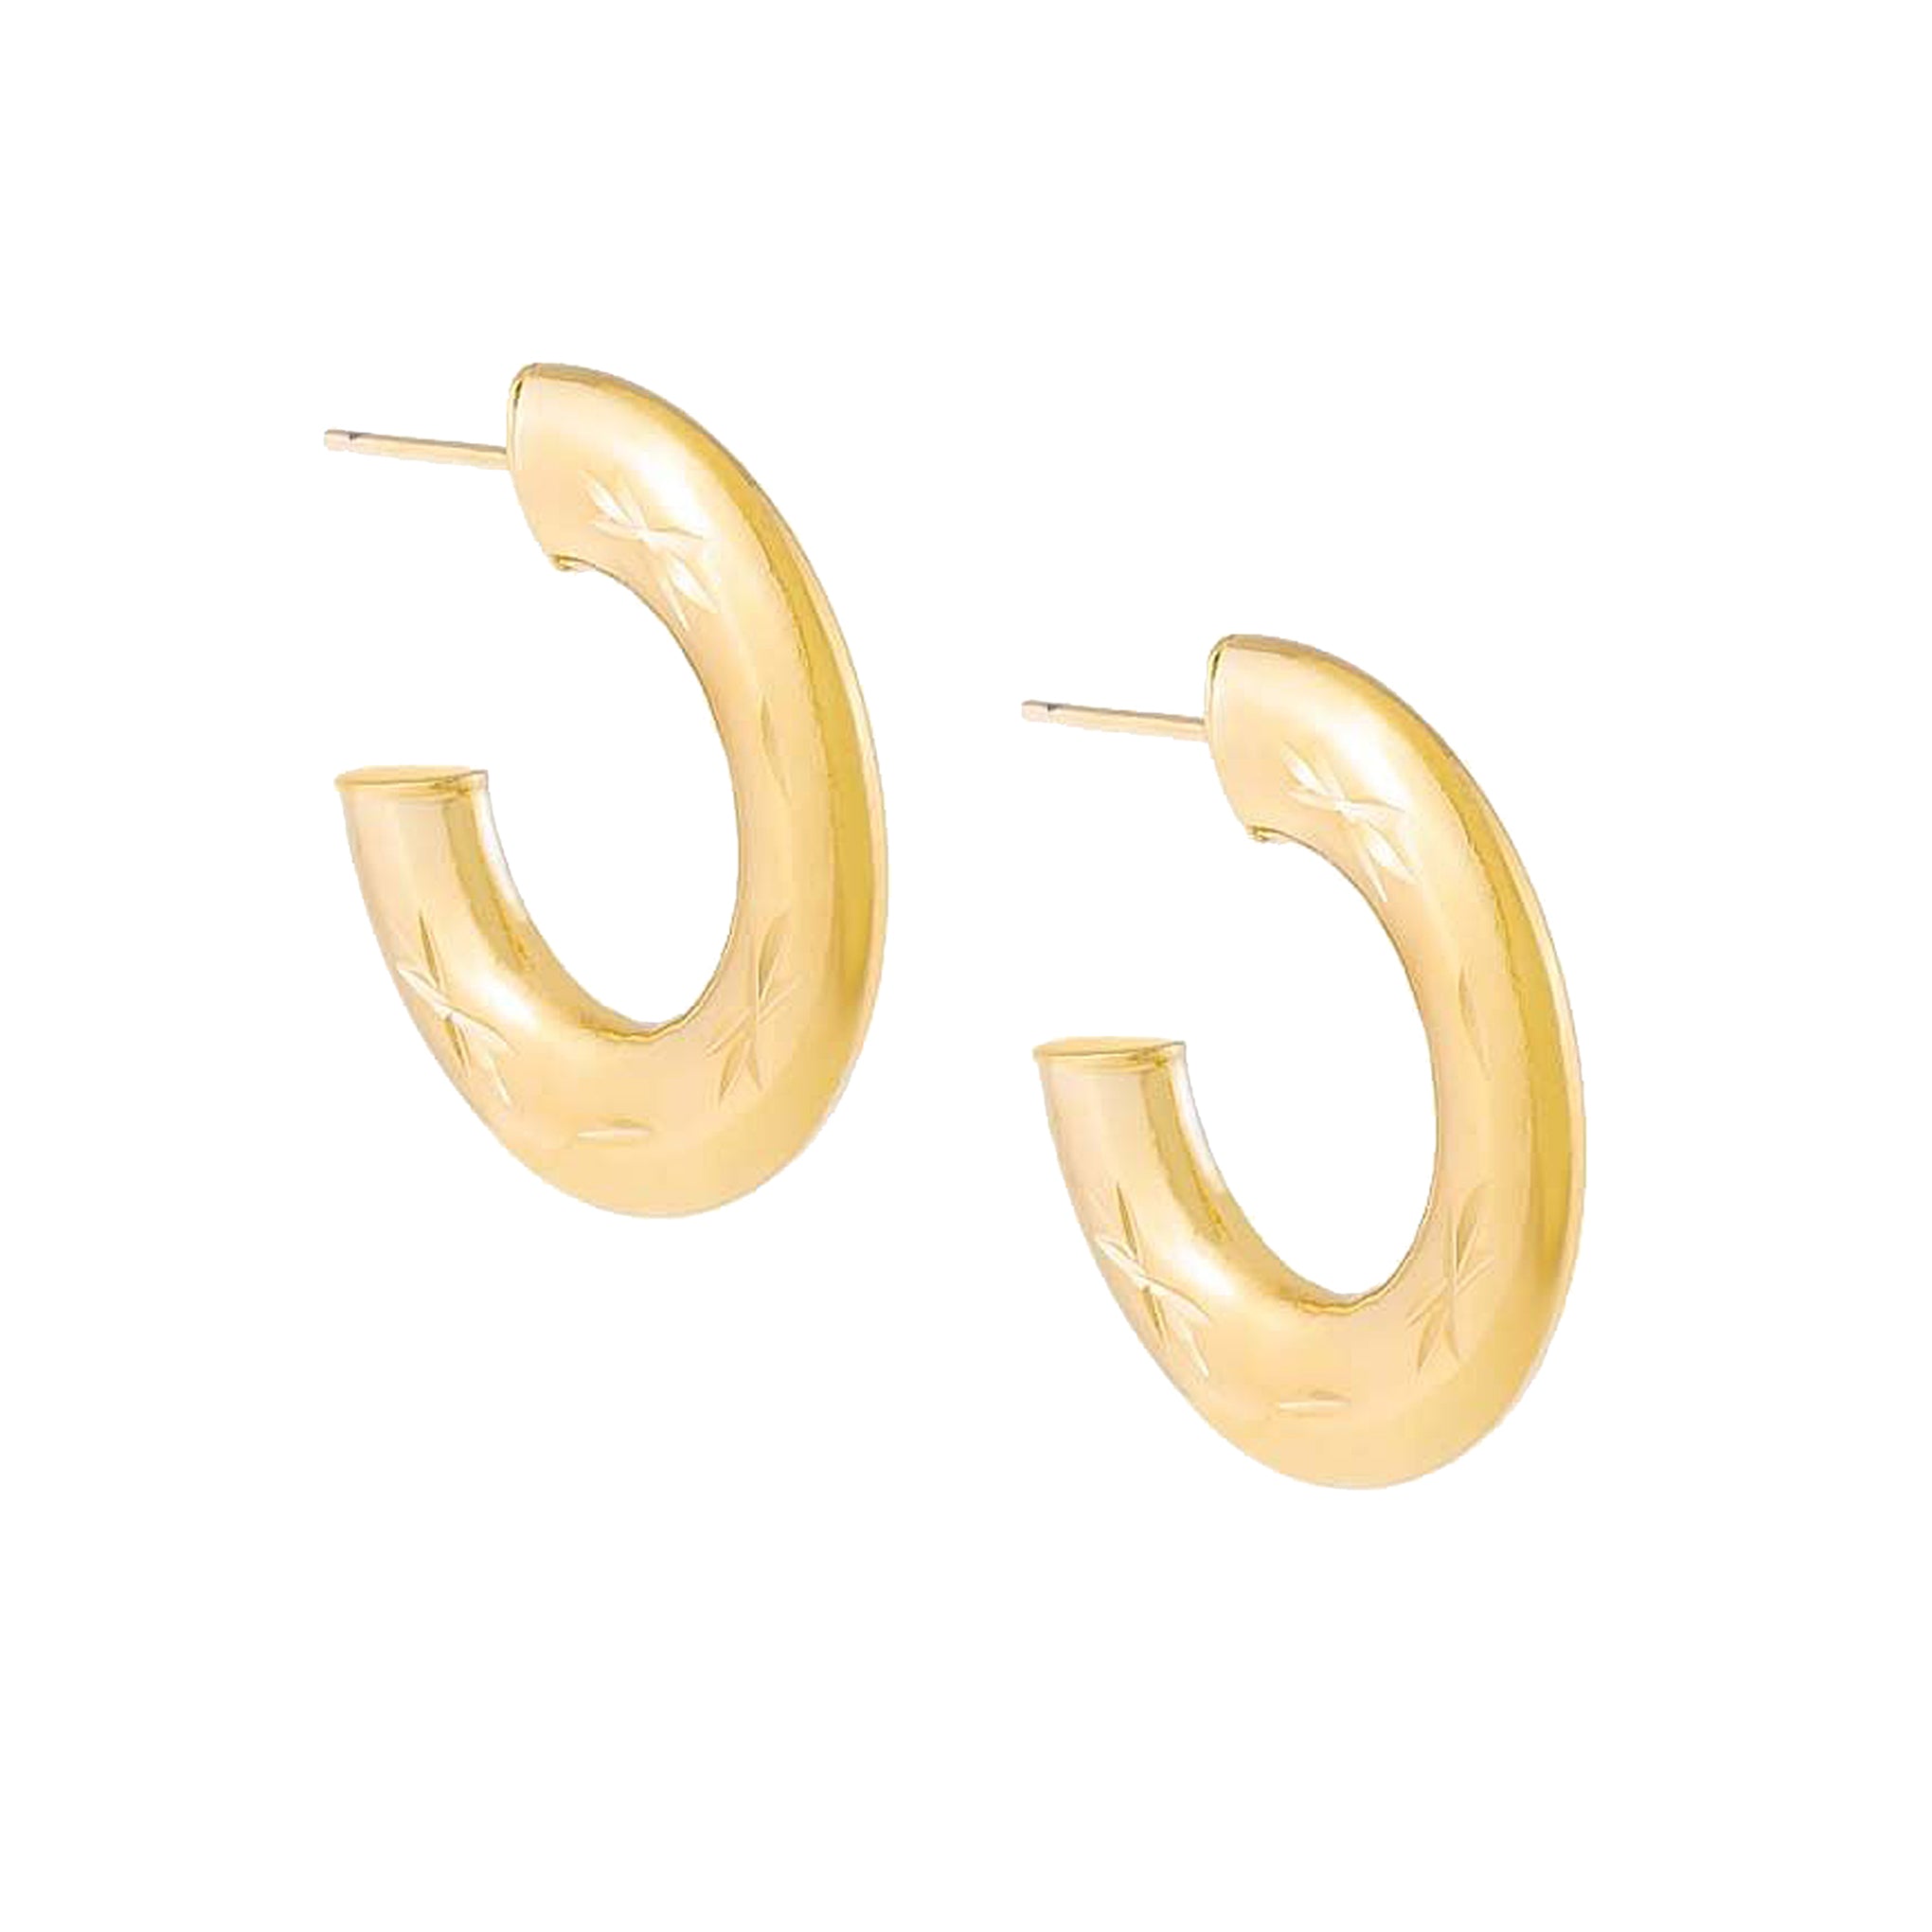 Adina Eden Celestial Arch Hoop Earring in 14k Gold Vermeil